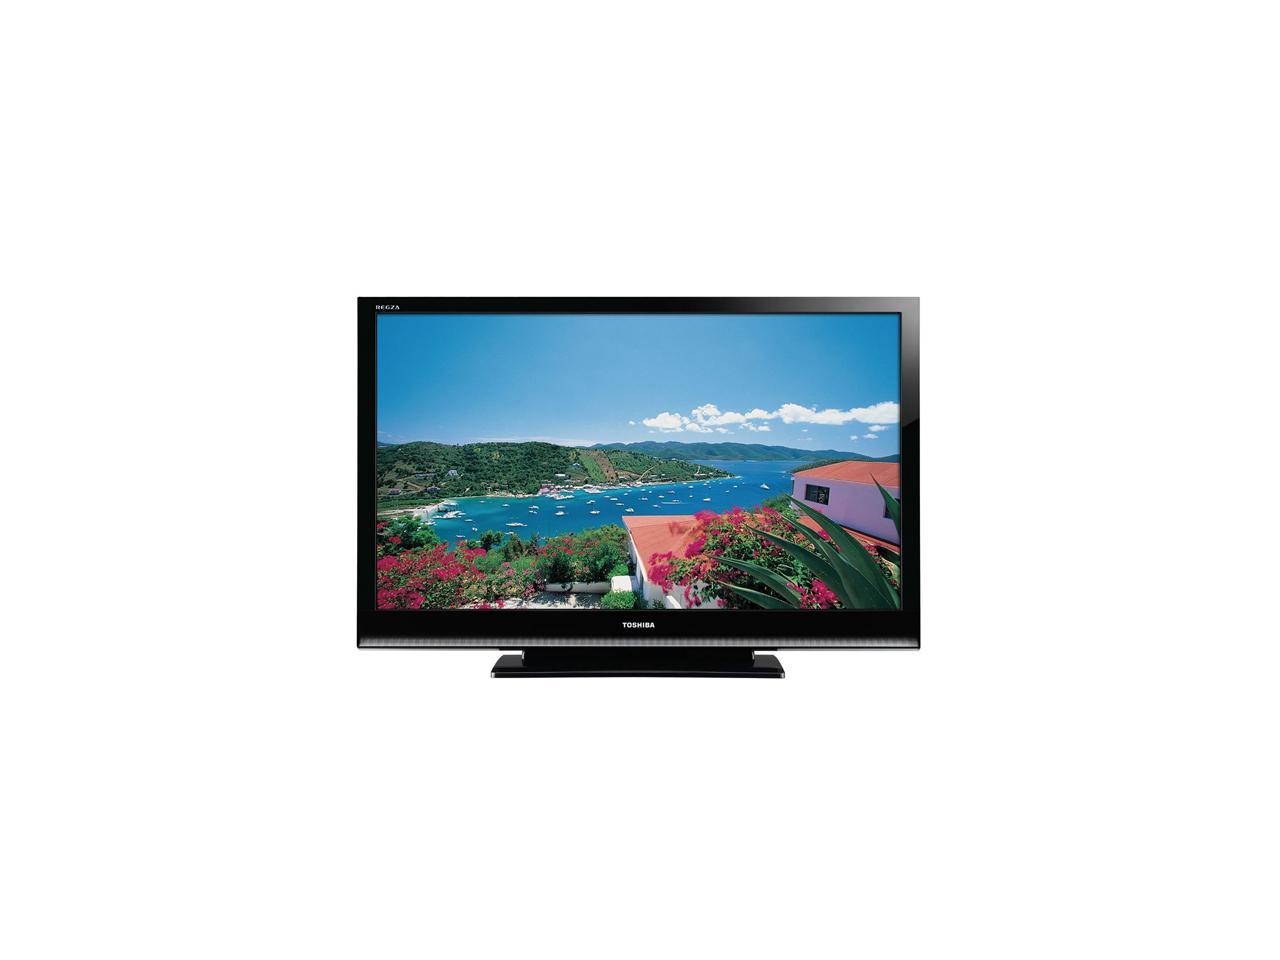 Toshiba Regza 52" 1080p 120Hz LCD HDTV - Newegg.com